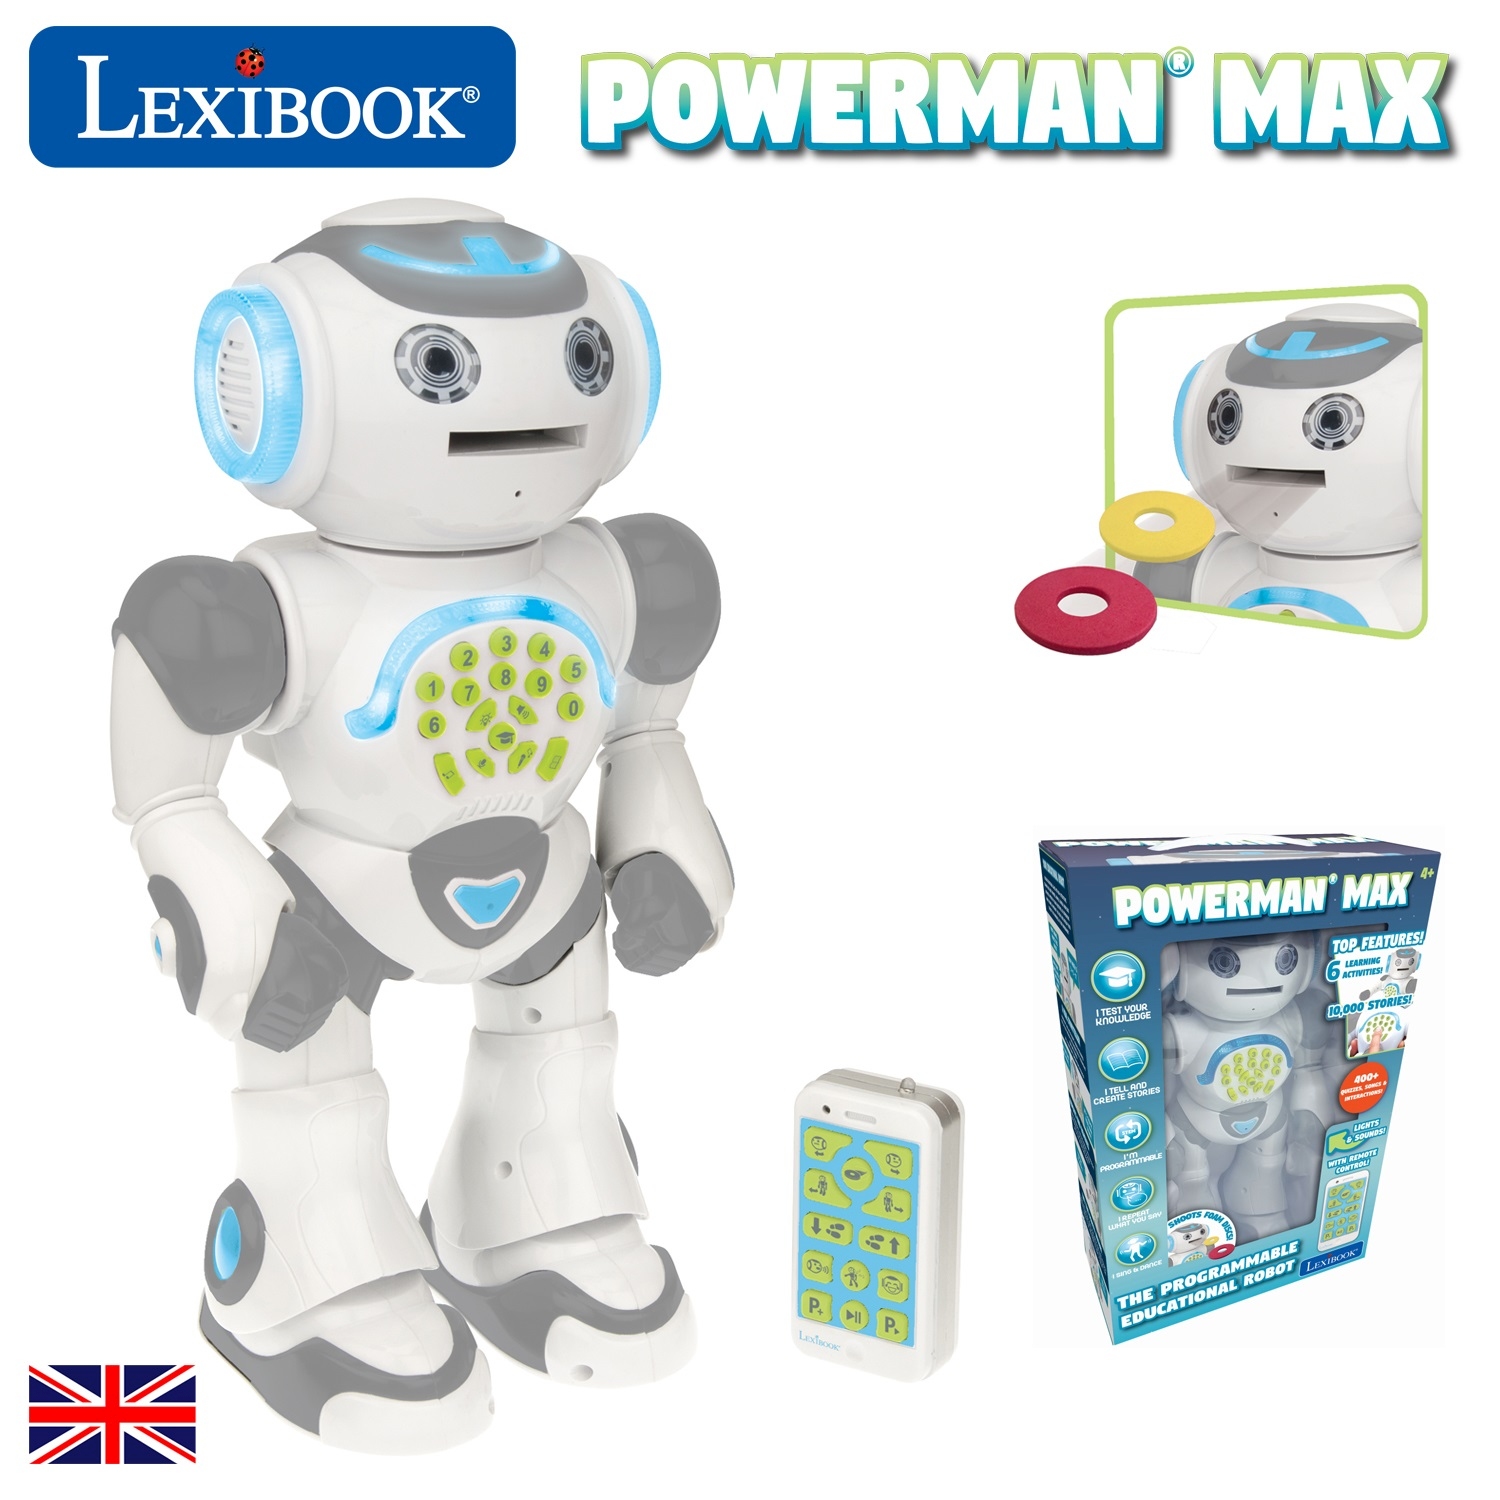 Lexibook POWERMAN Max Educational Robot with Remote Control